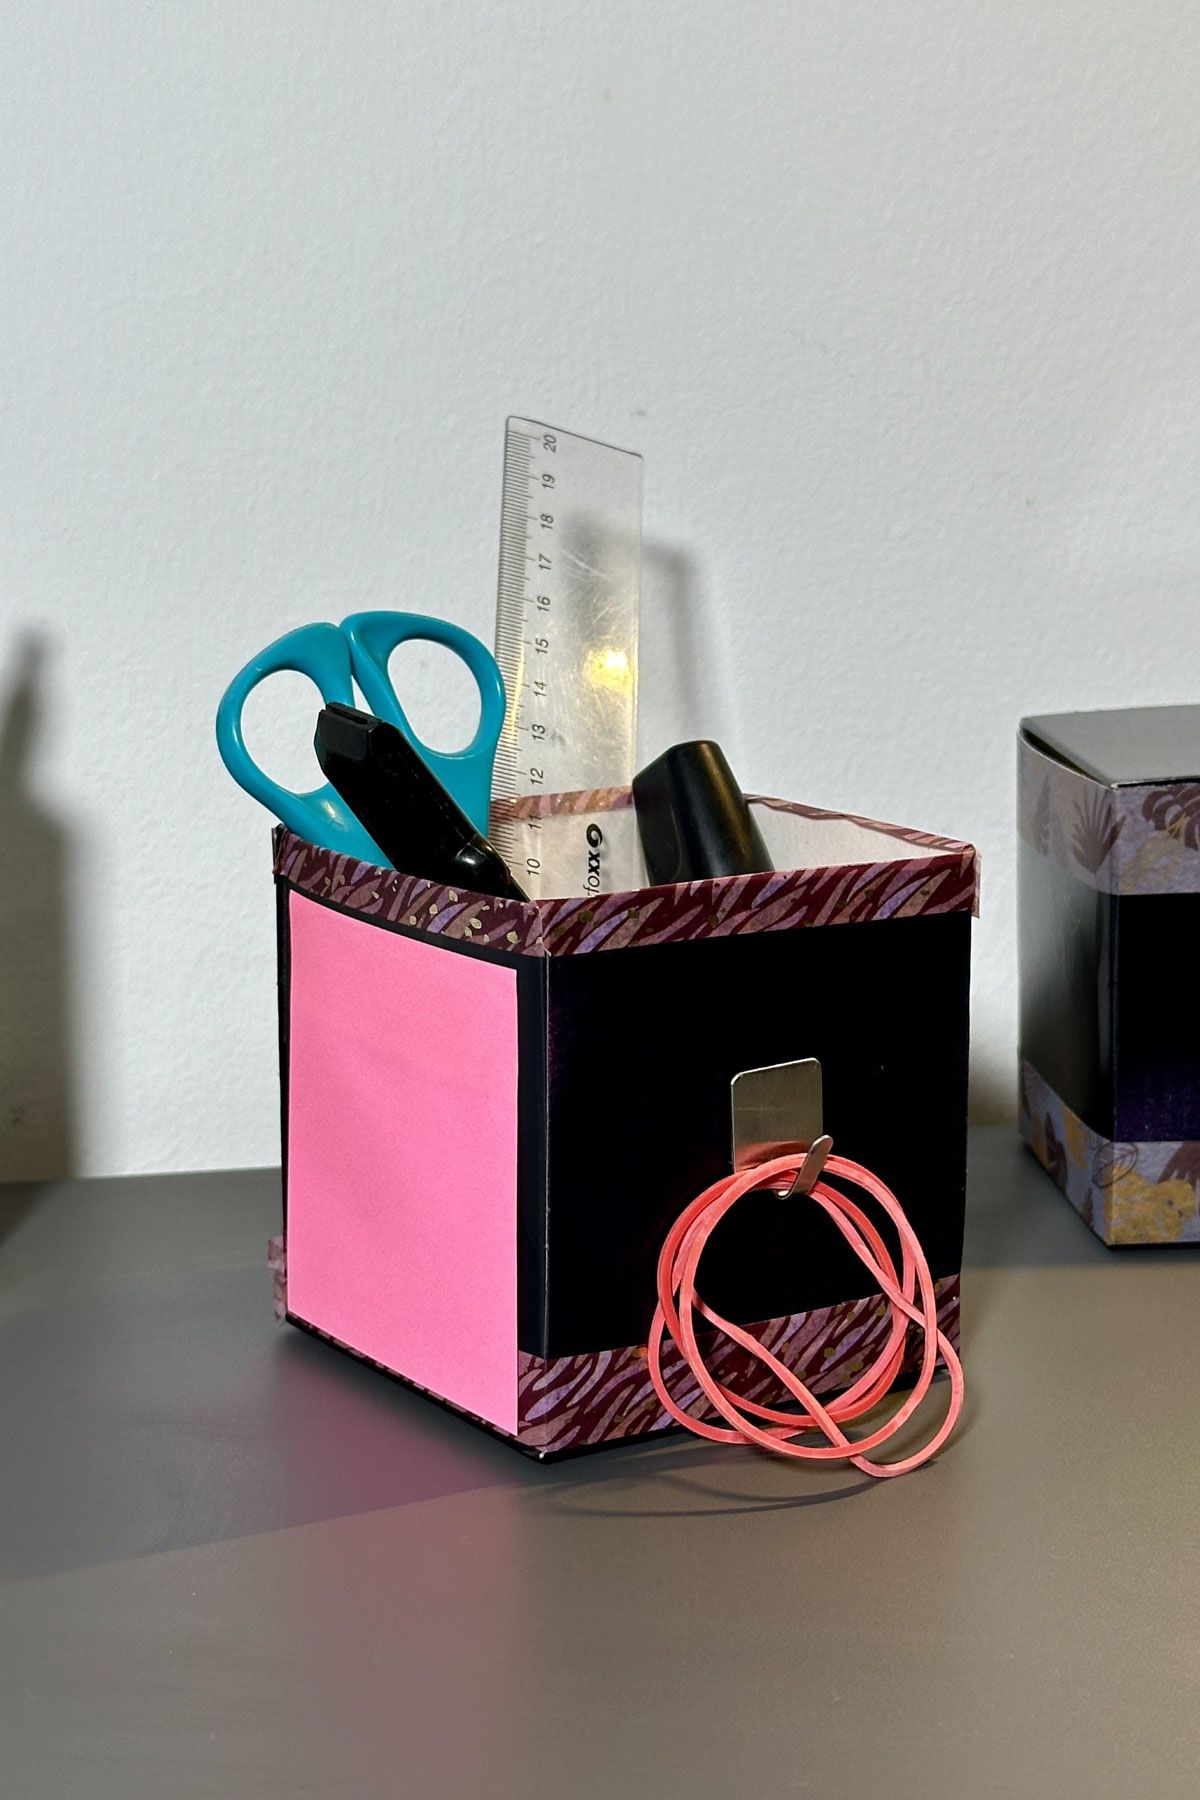 Transform A Coffee Pod Box Into A Stationary Holder